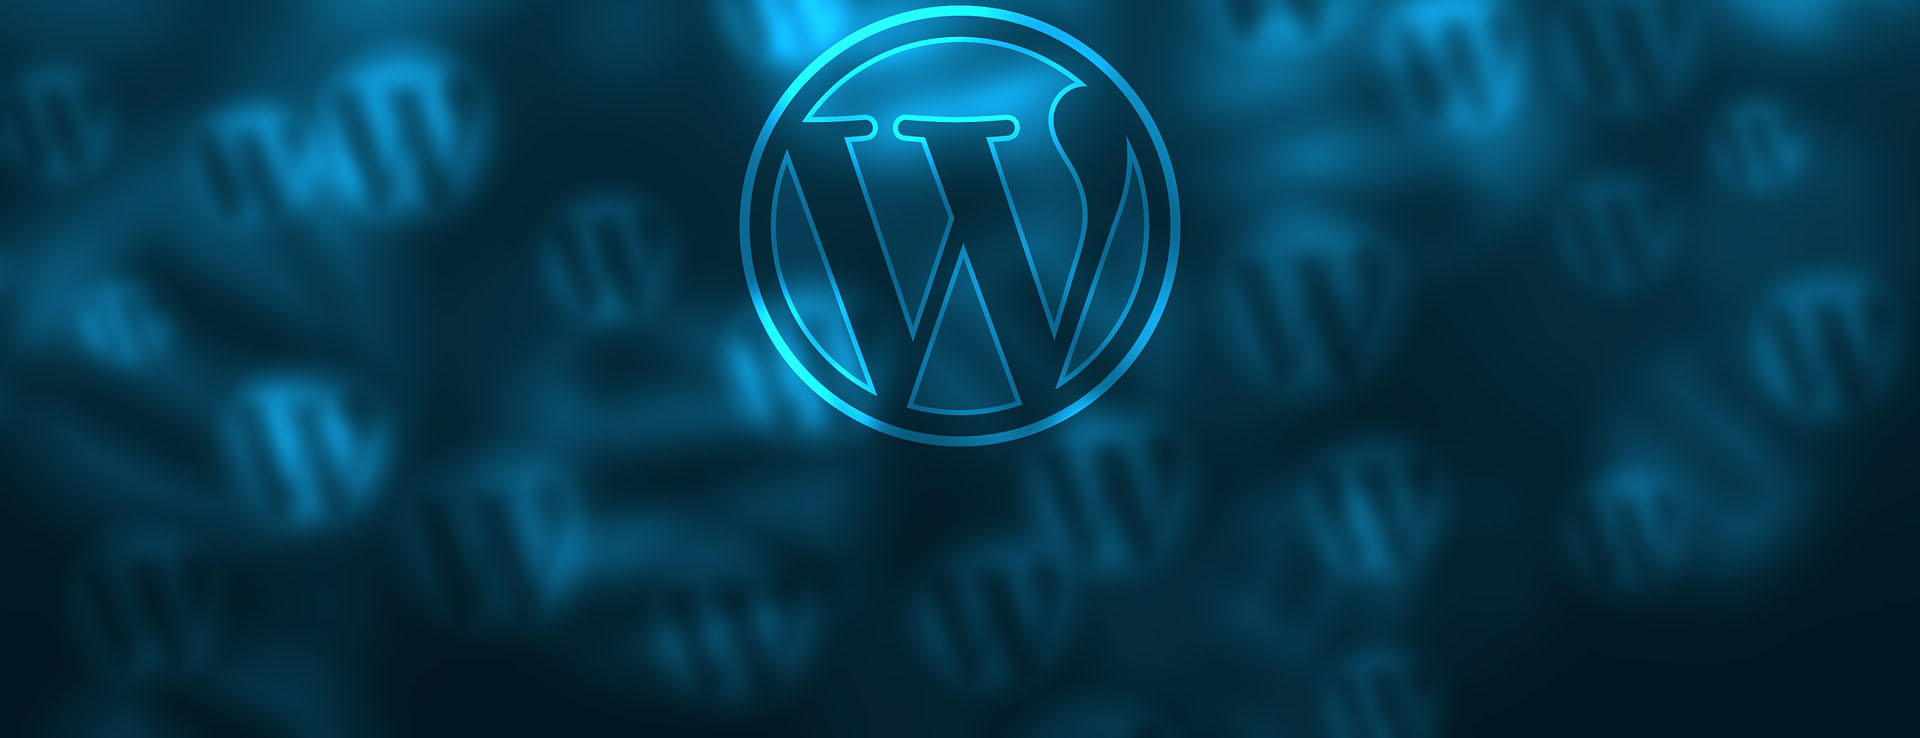 Wordpress Development